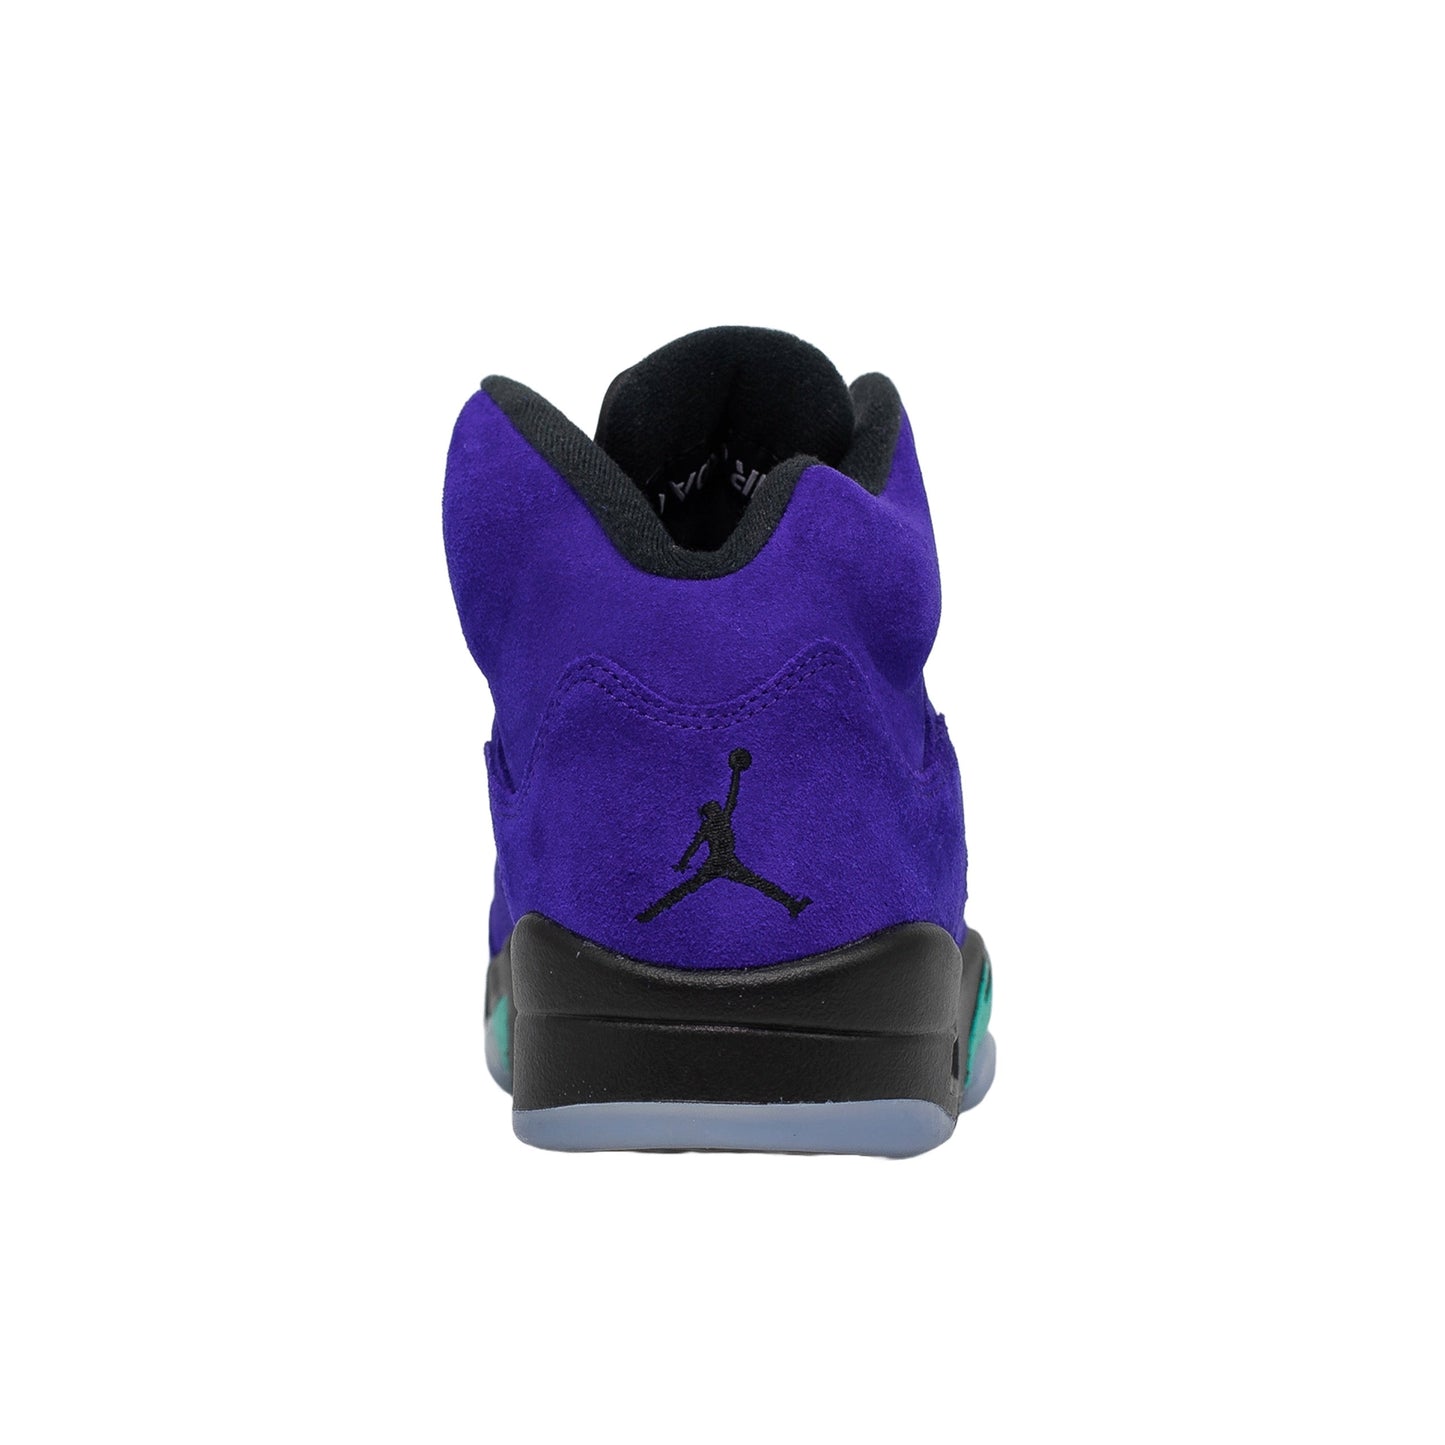 Air Jordan 5, Alternate Grape